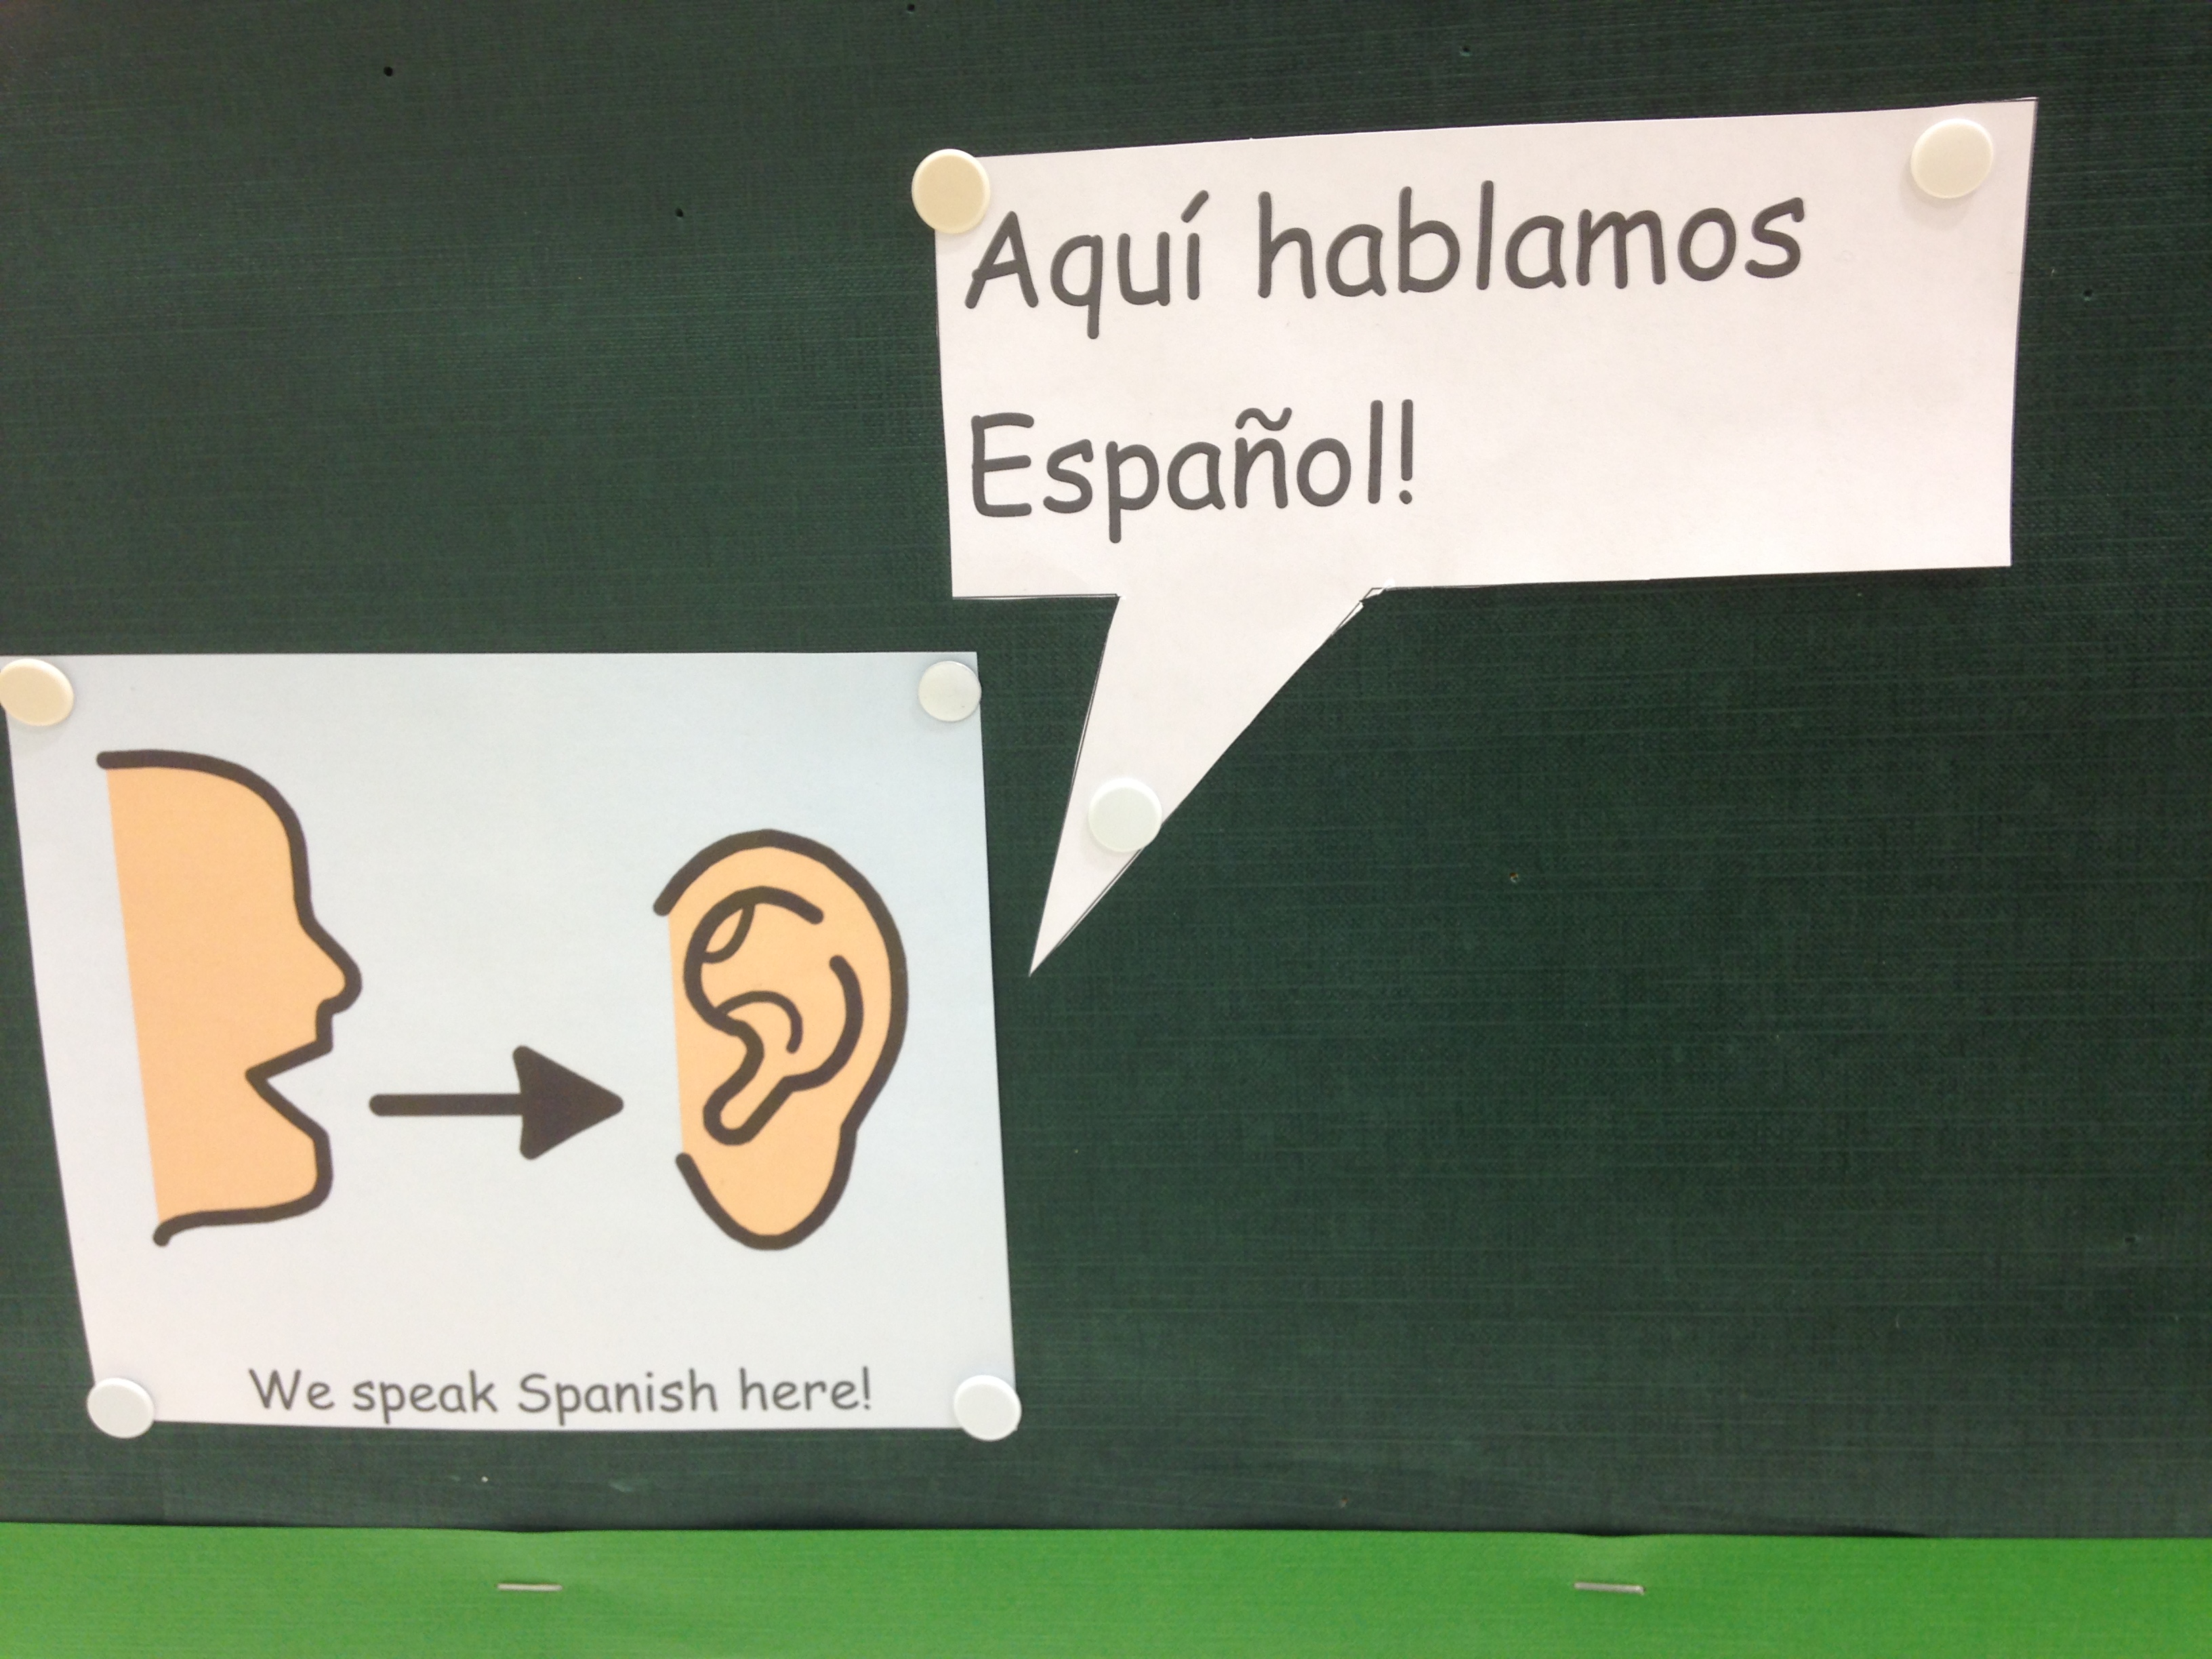 image of Spanish text